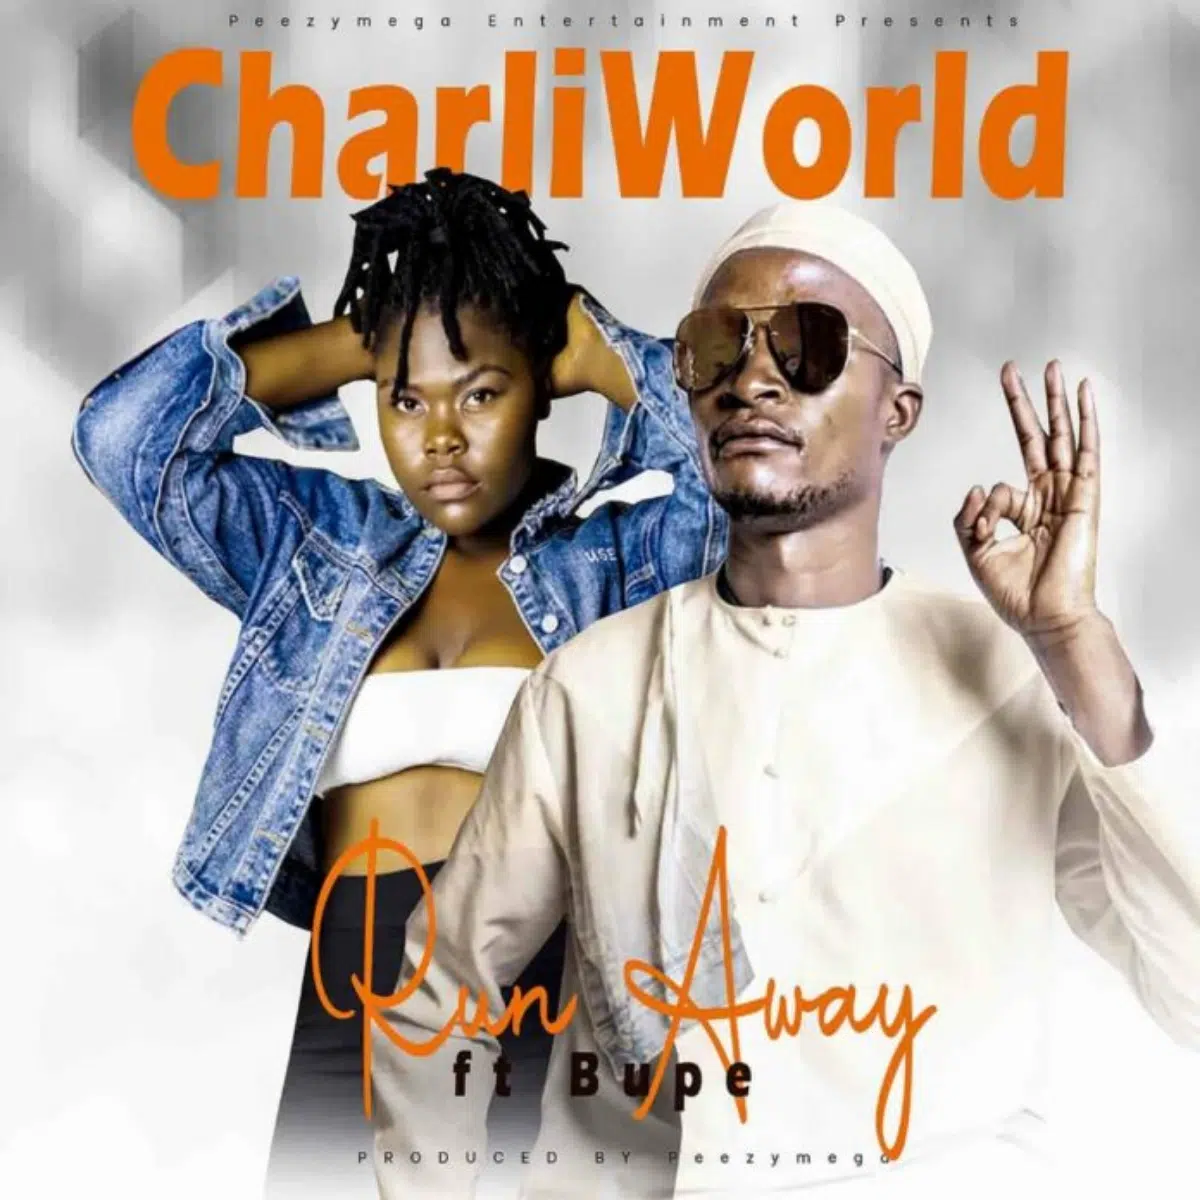 DOWNLOAD: Chali World Ft. Bupe – “Runaway” Mp3